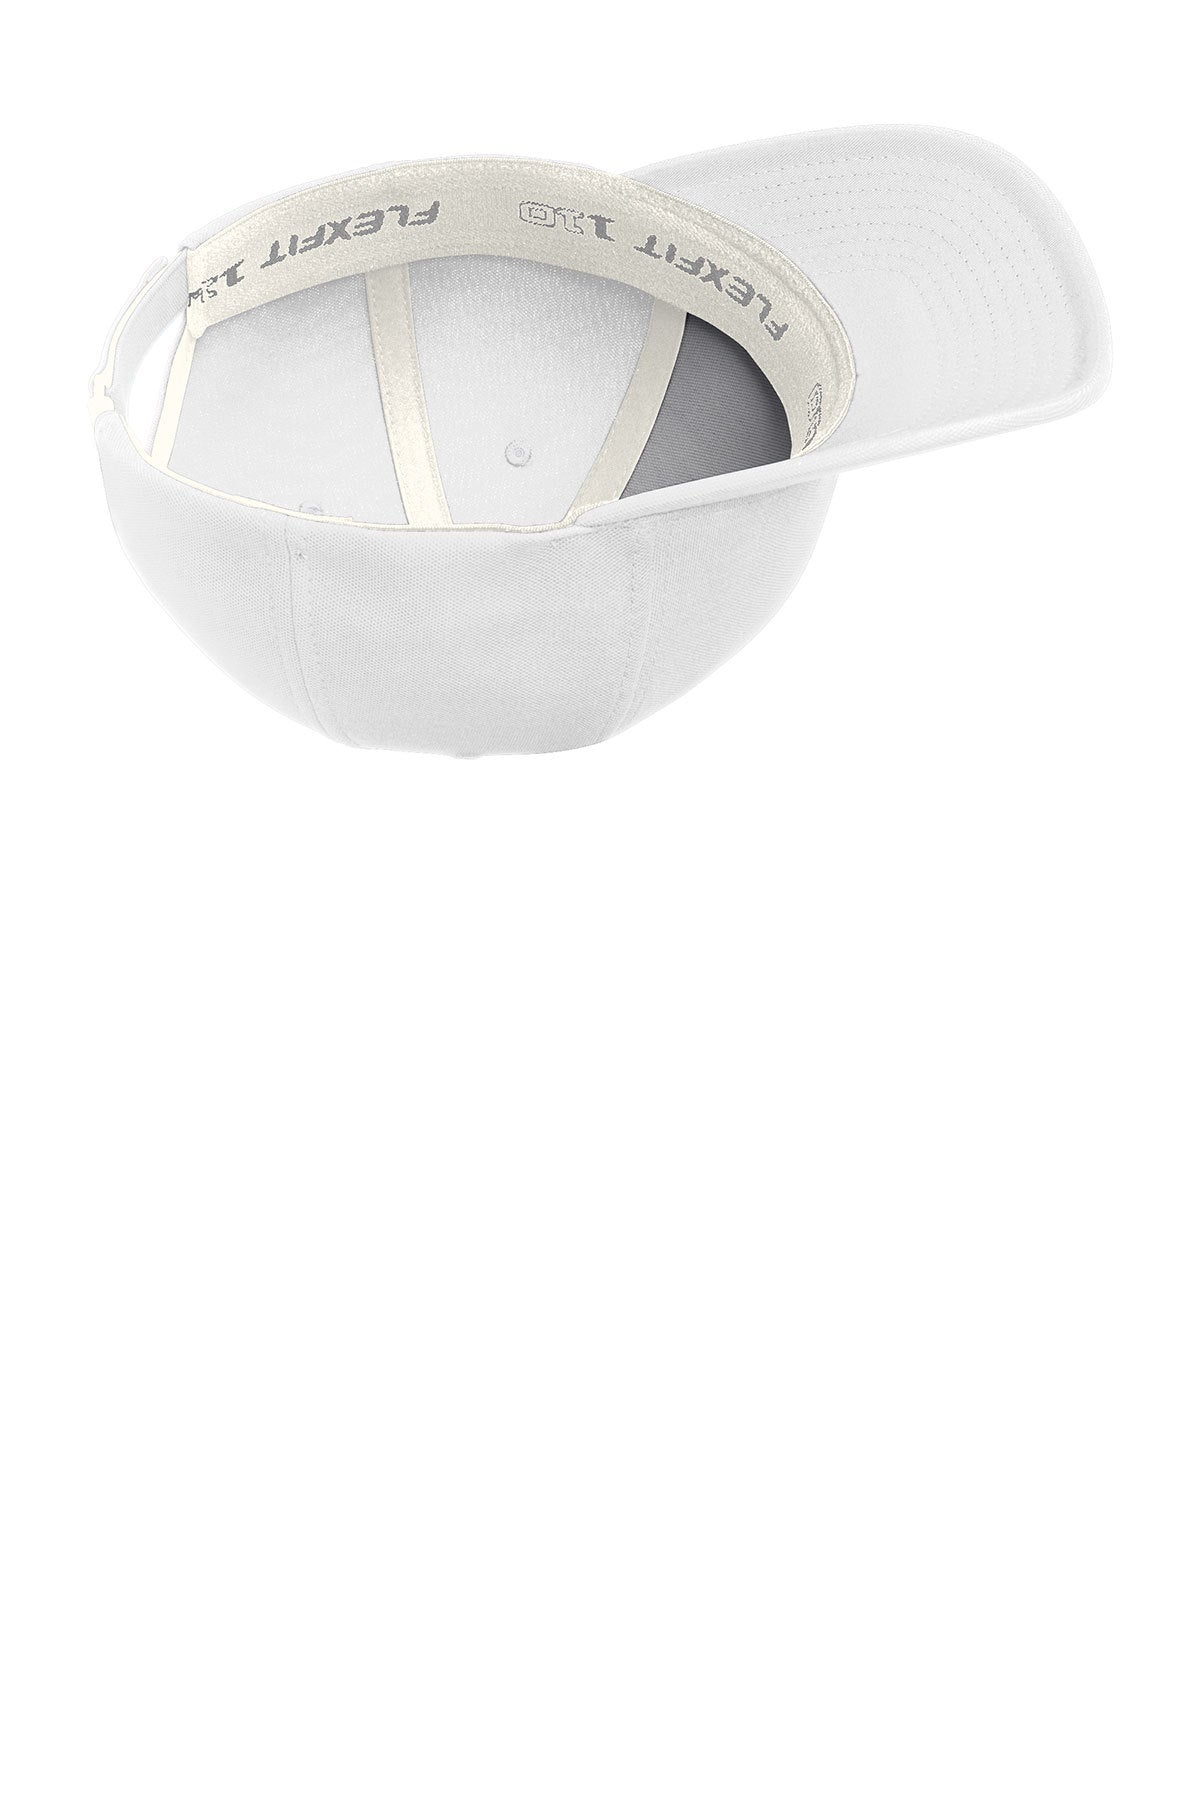 Port Authority Flexfit Custom One Ten Cool & Dry Mini Pique Caps, White